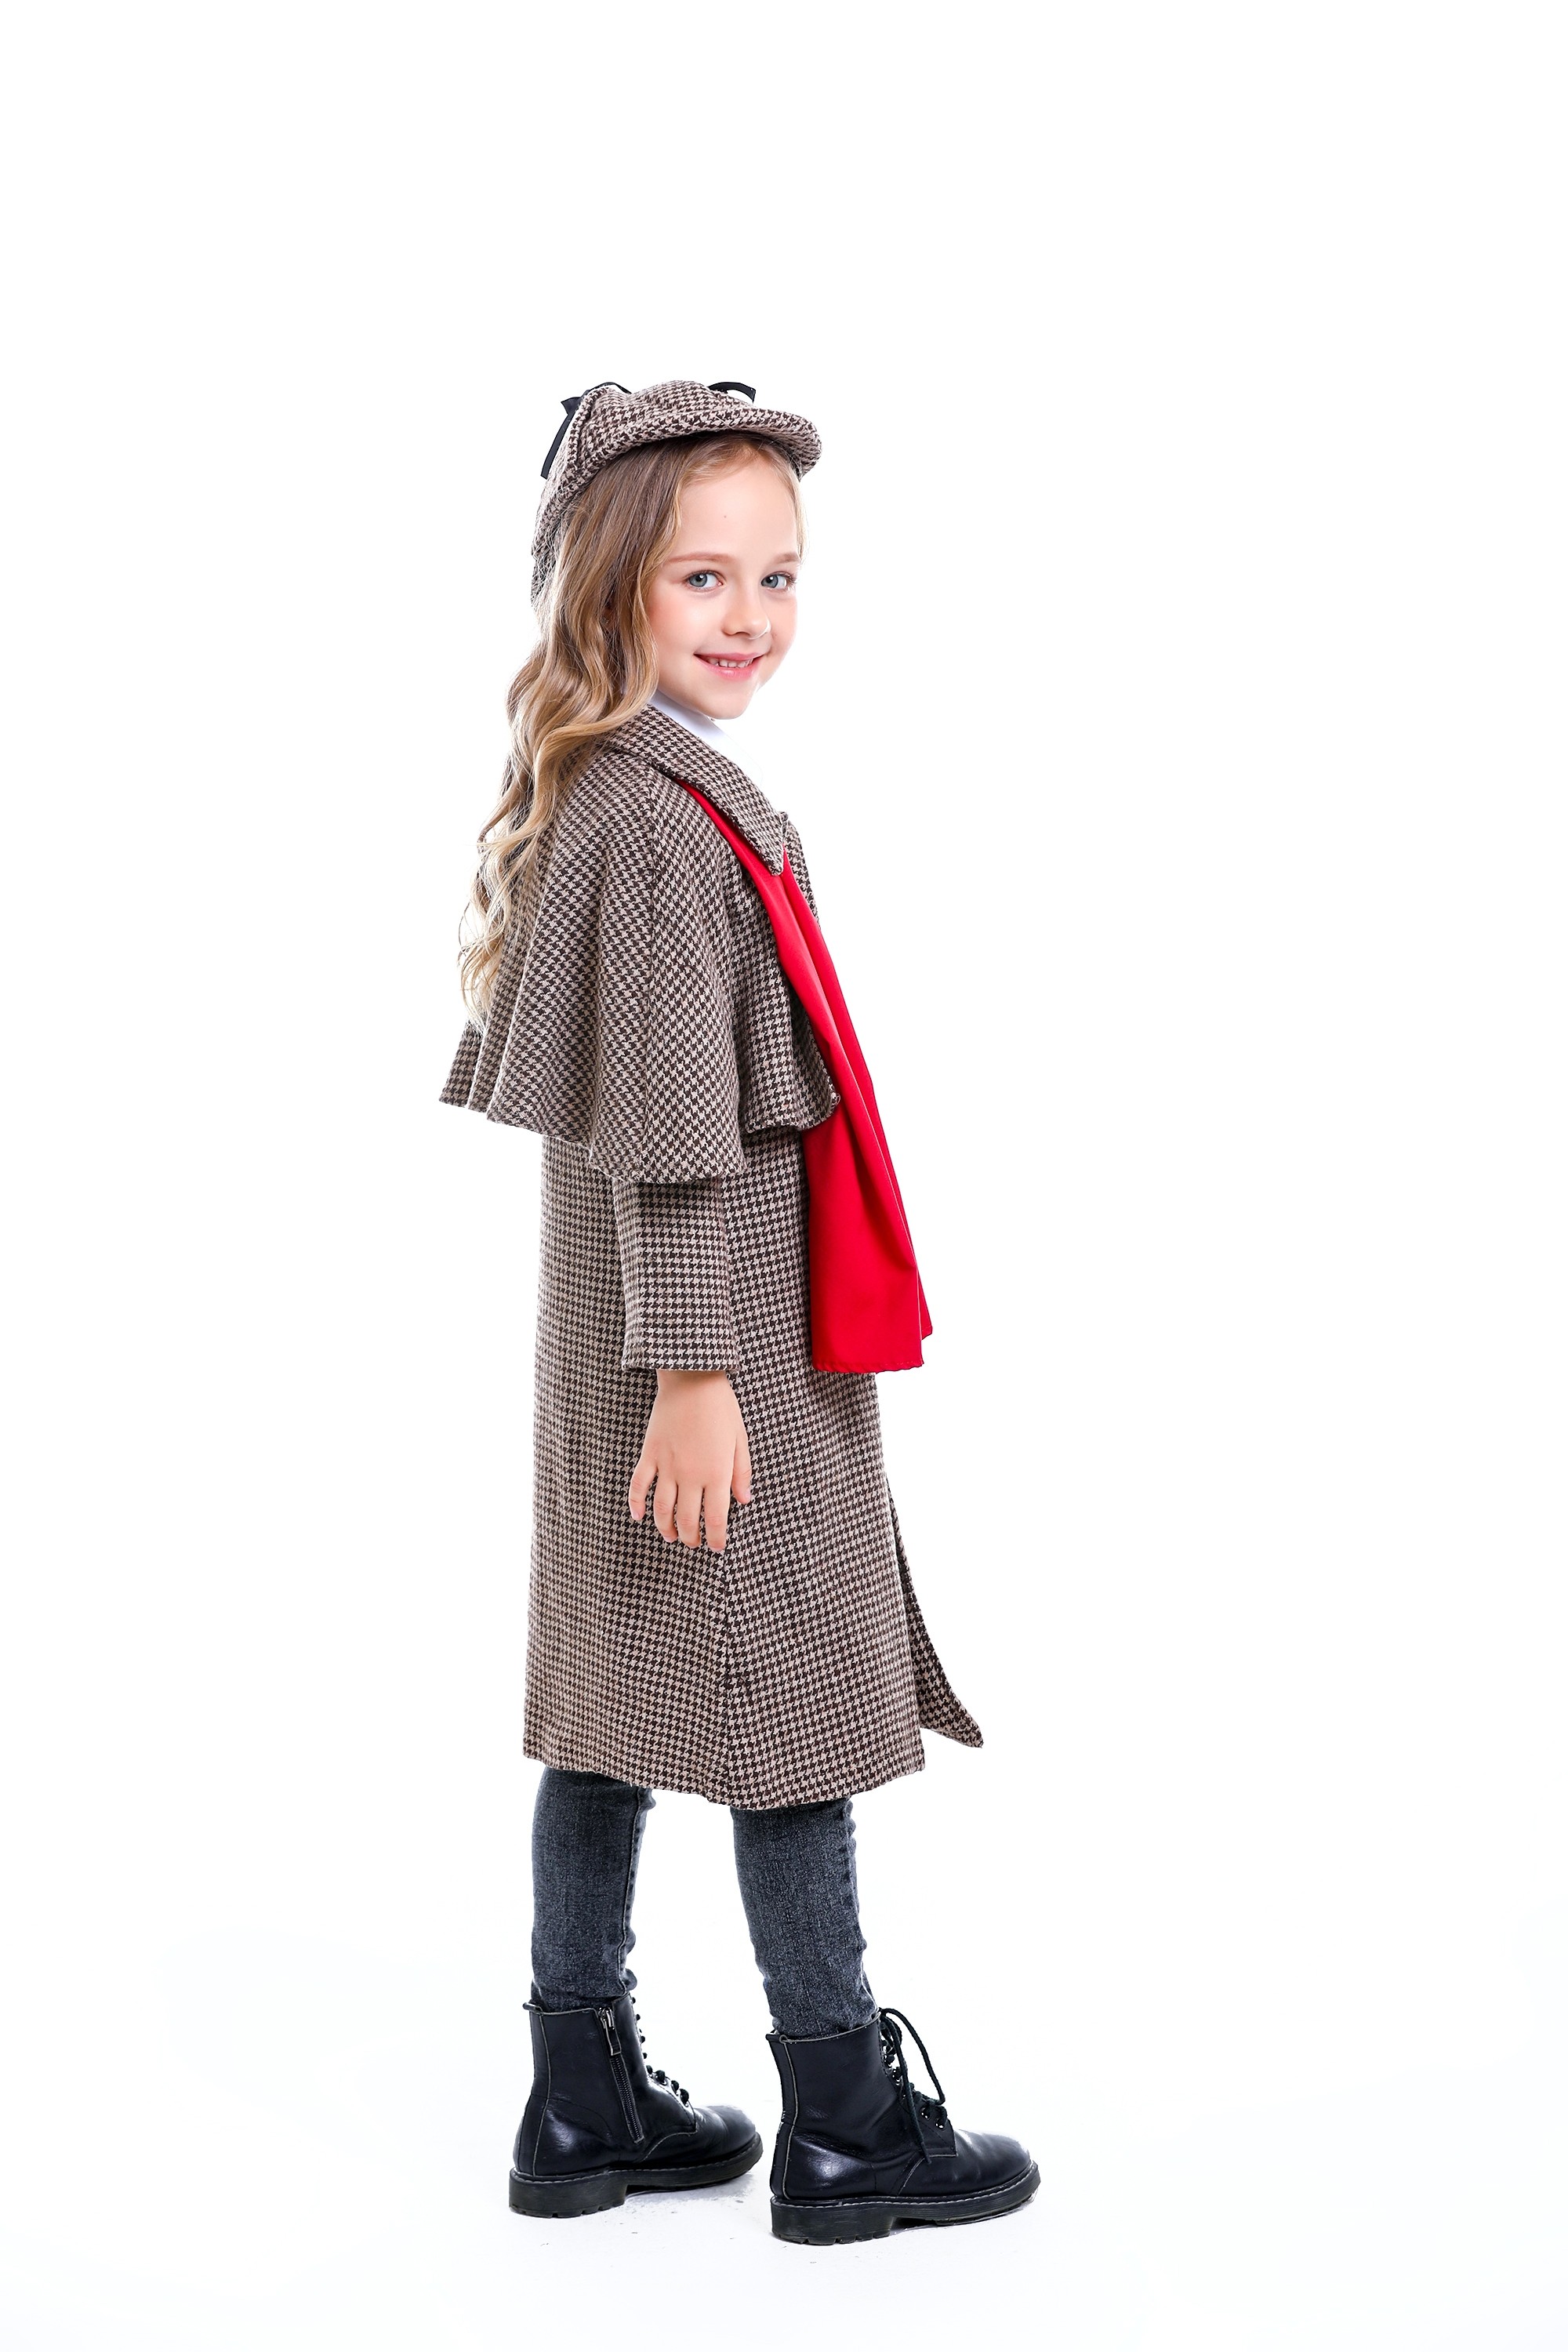 Kids Sherlock Holmes Costume - Book Week Costume - Holidays Costume - Themes